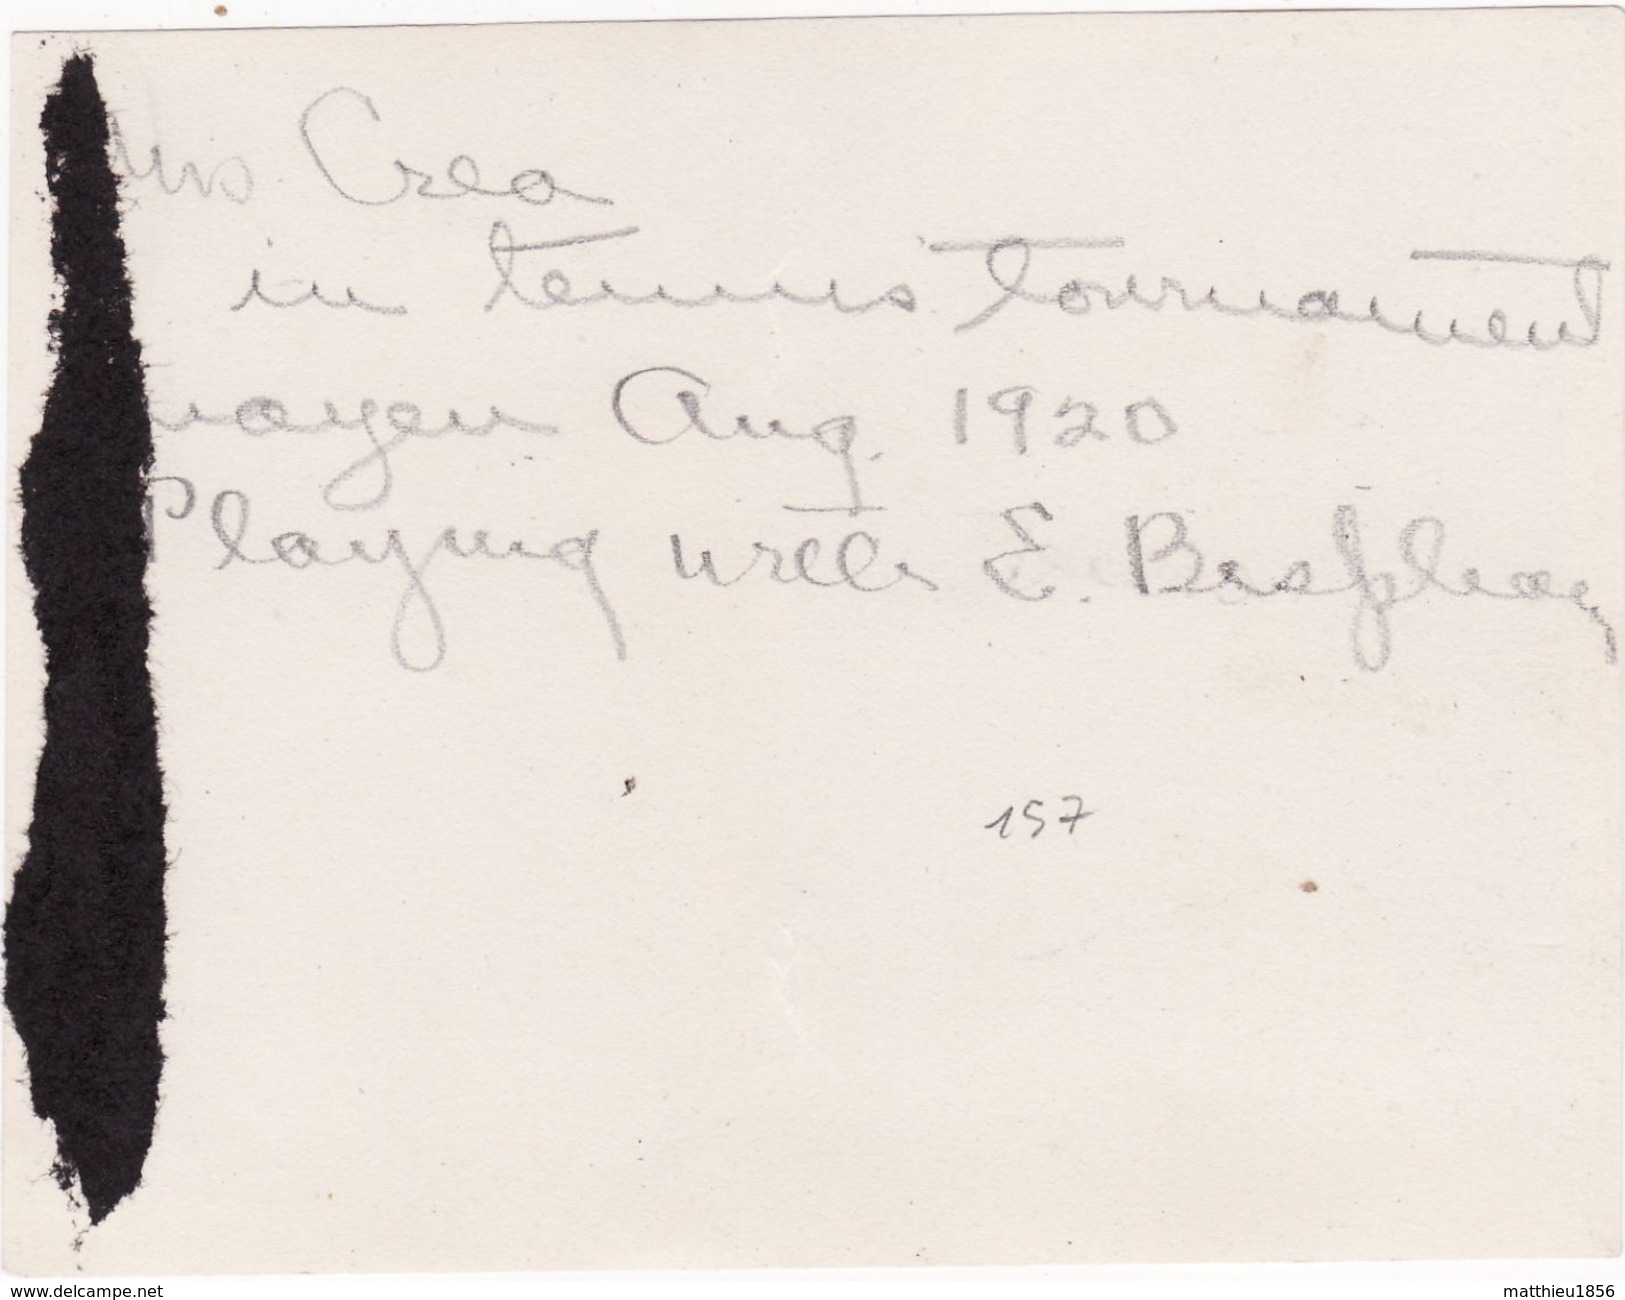 Foto August 1920 MAYEN - "Eleonore Bispham" YMCA Frau, Tennis (A184, Ww1, Wk 1) - Mayen